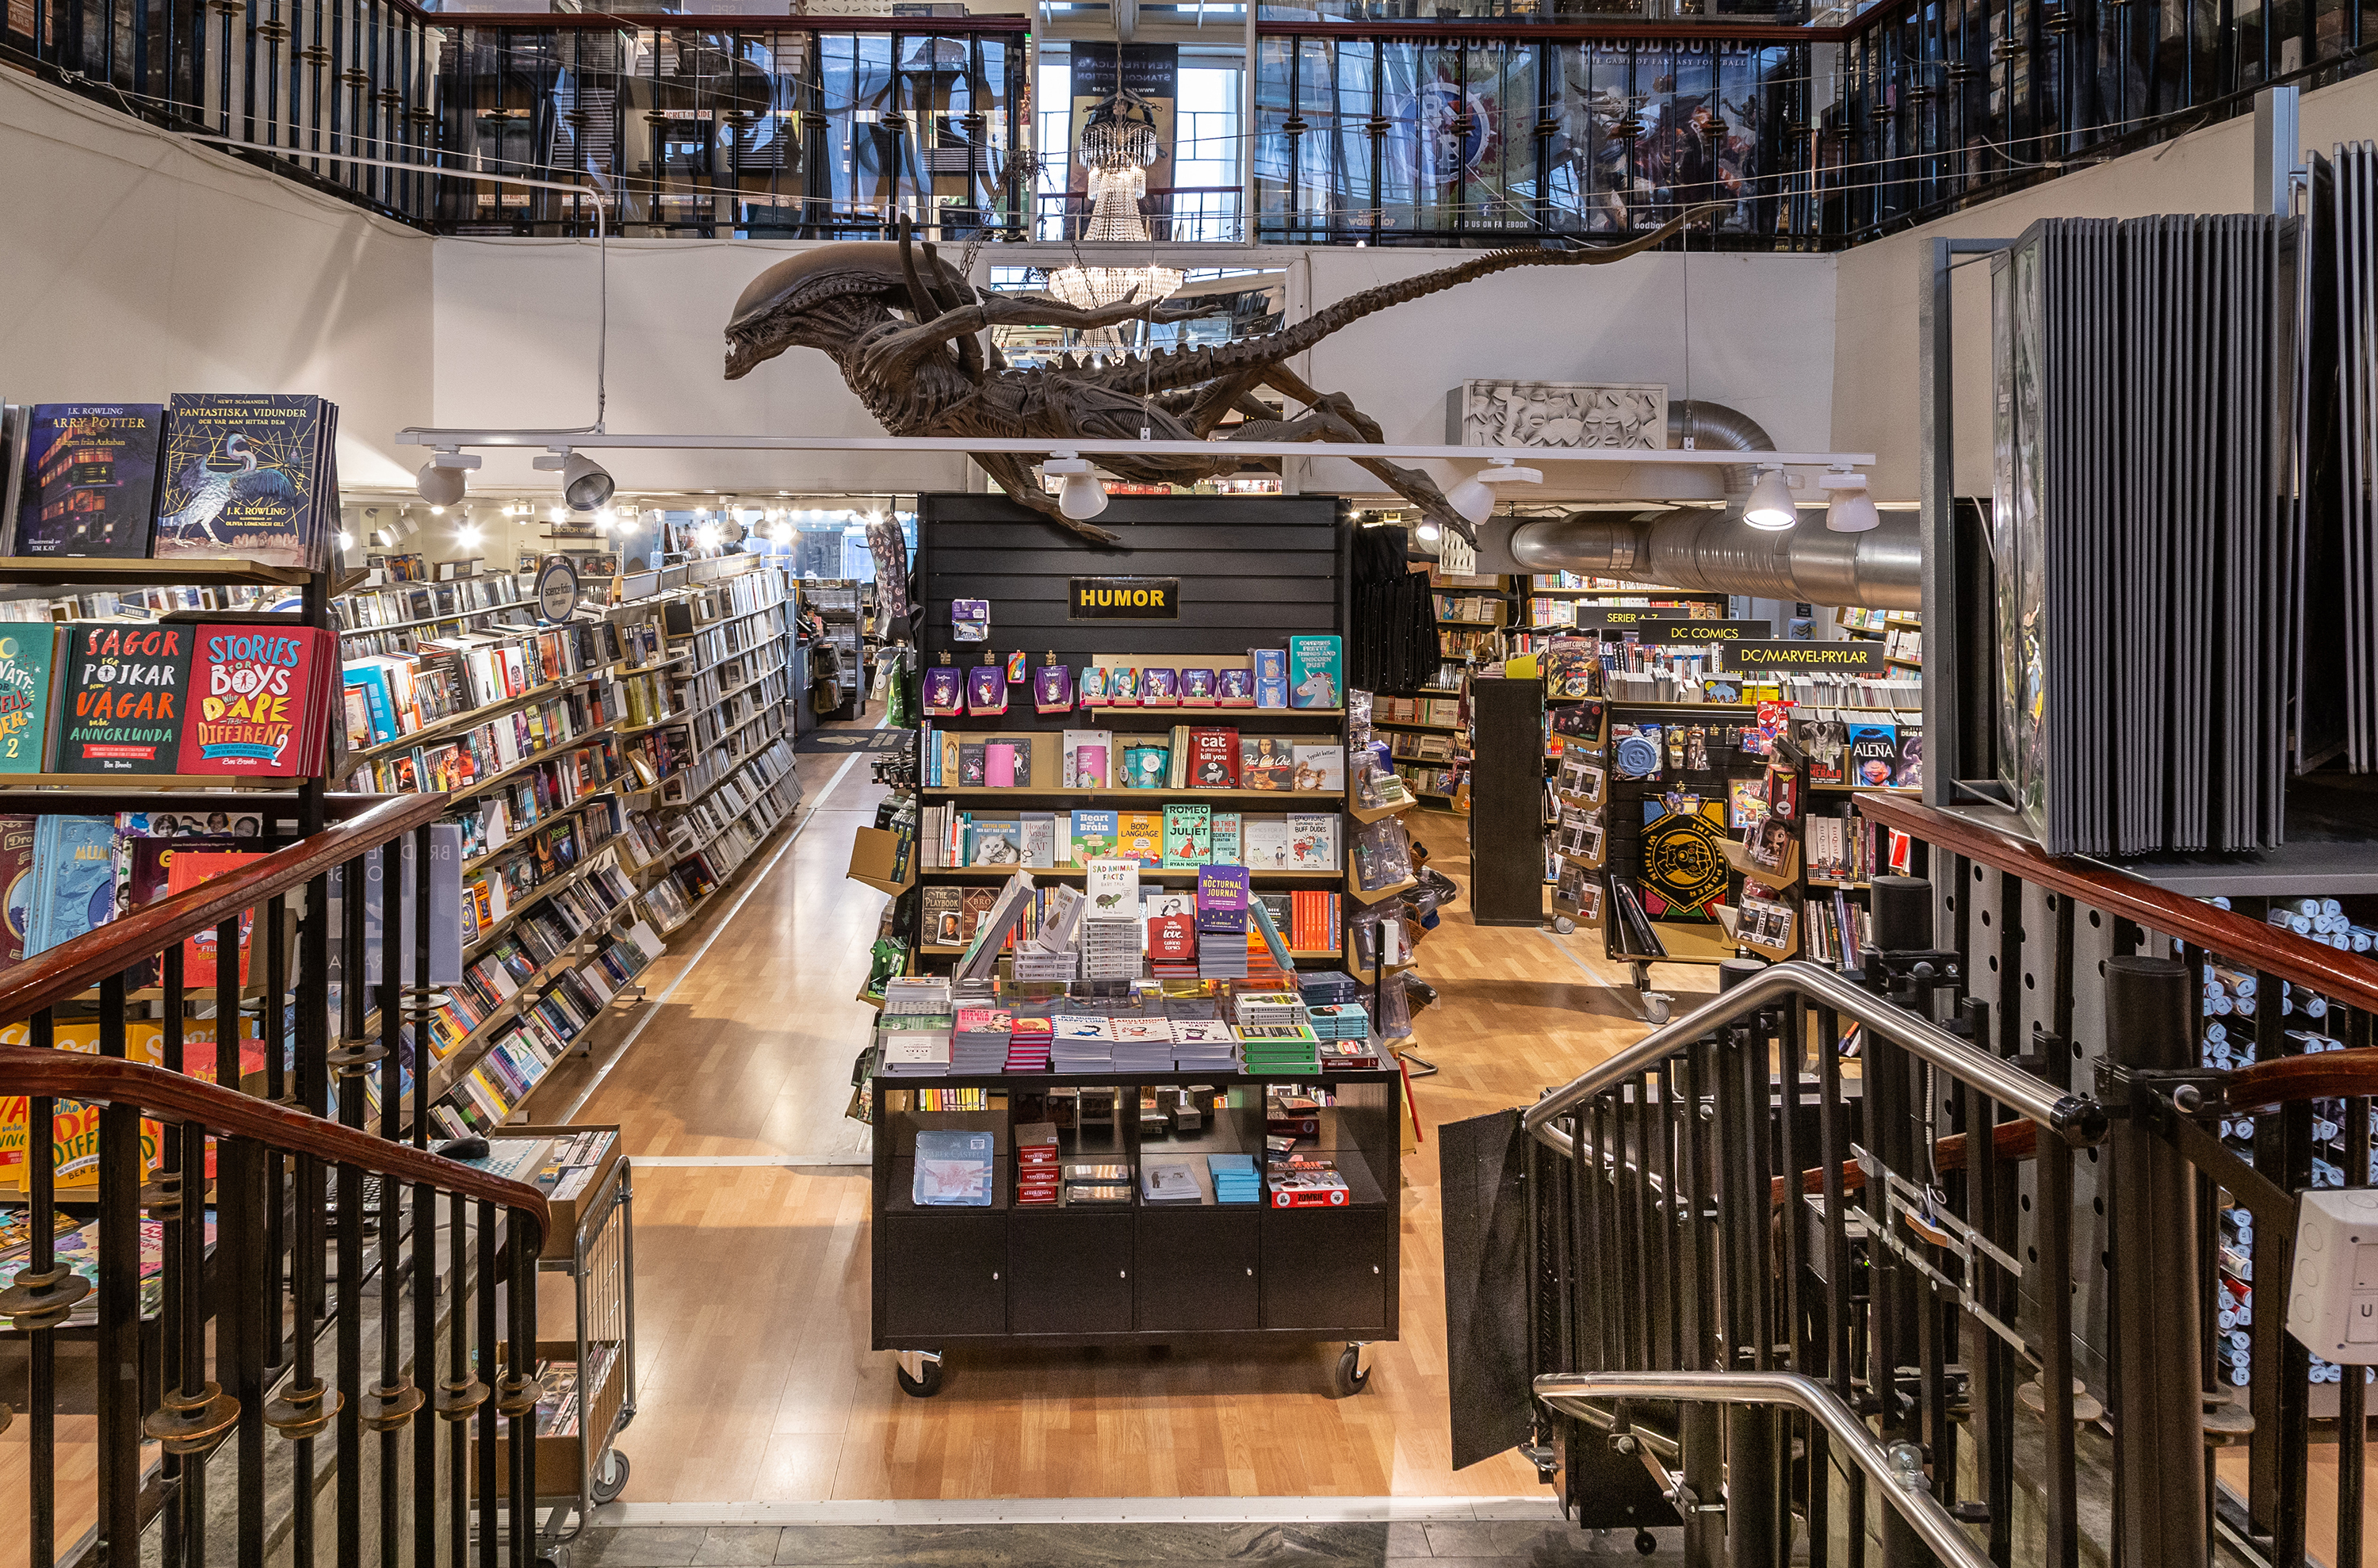 The English Bookshop Stockholm